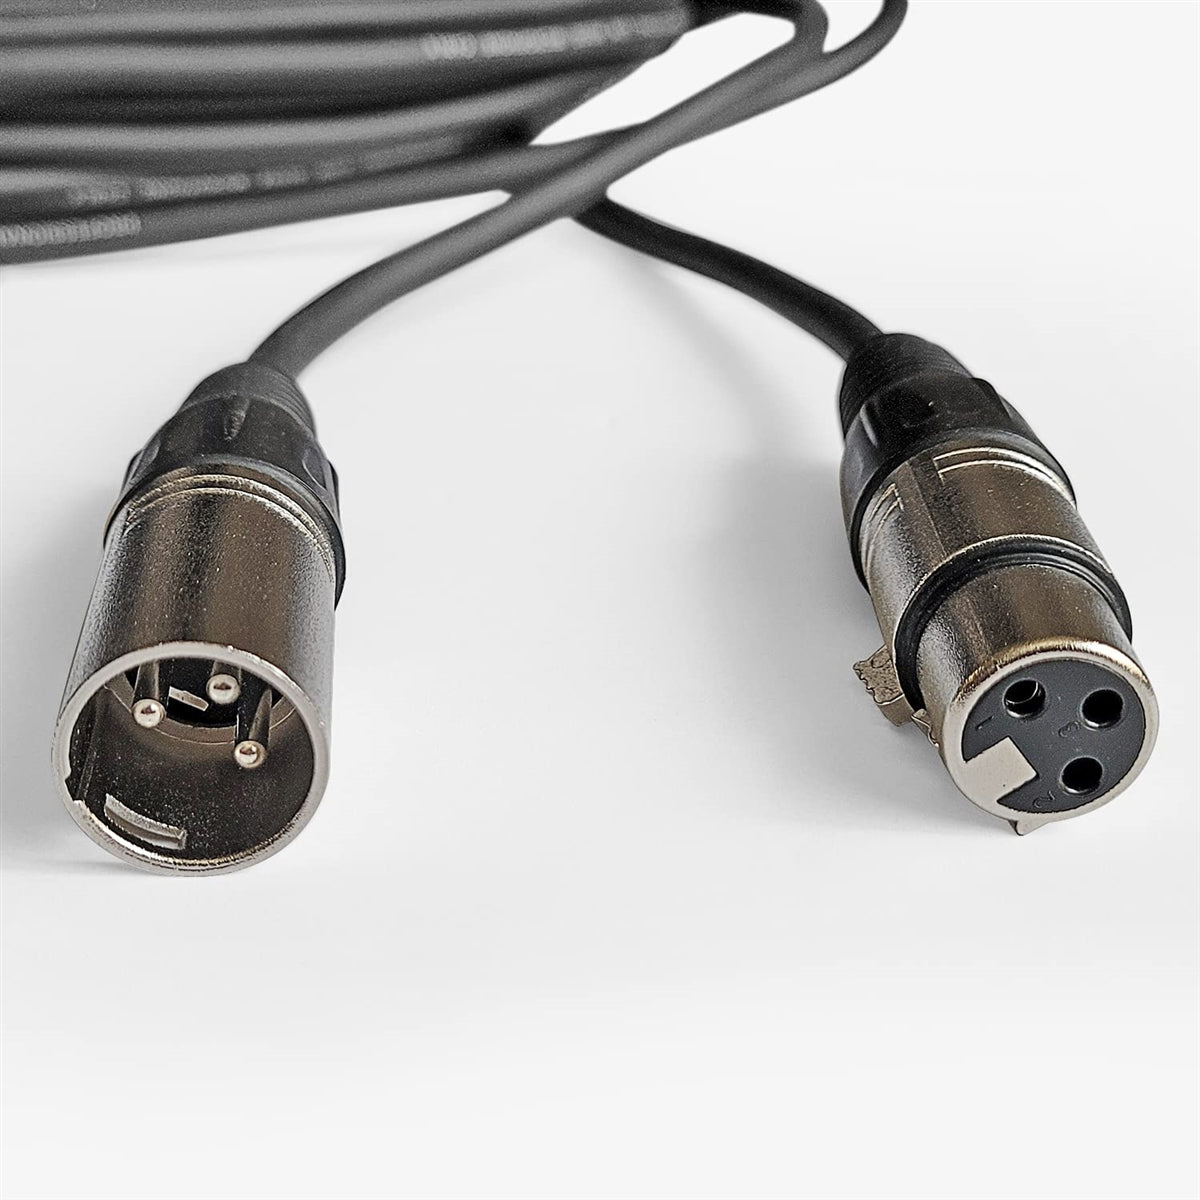 6ft XLR Male to XLR Female Microphone studio cable